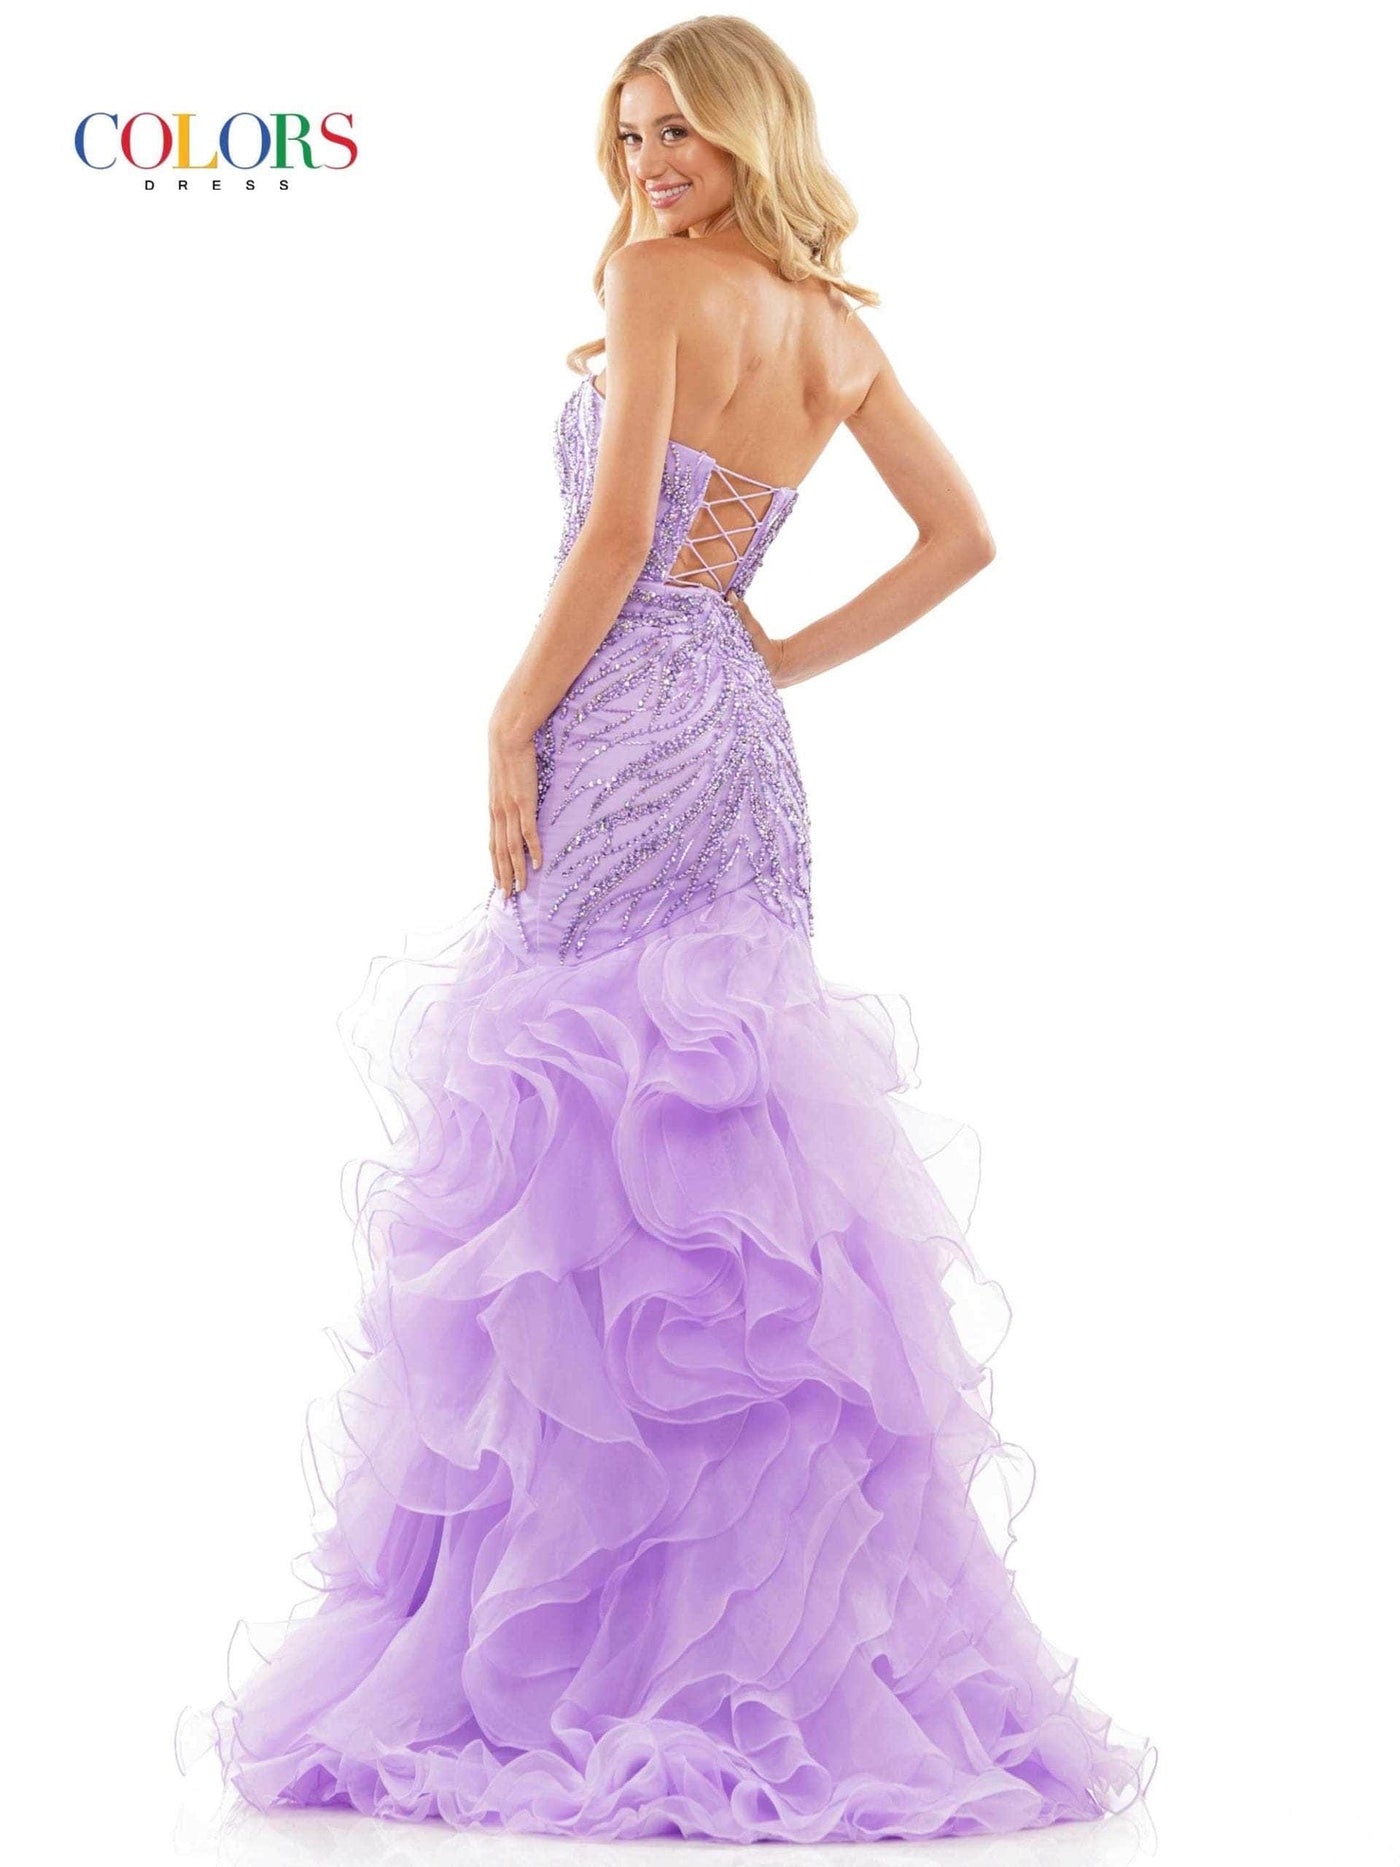 Colors Dress 2926 - Mermaid Gown